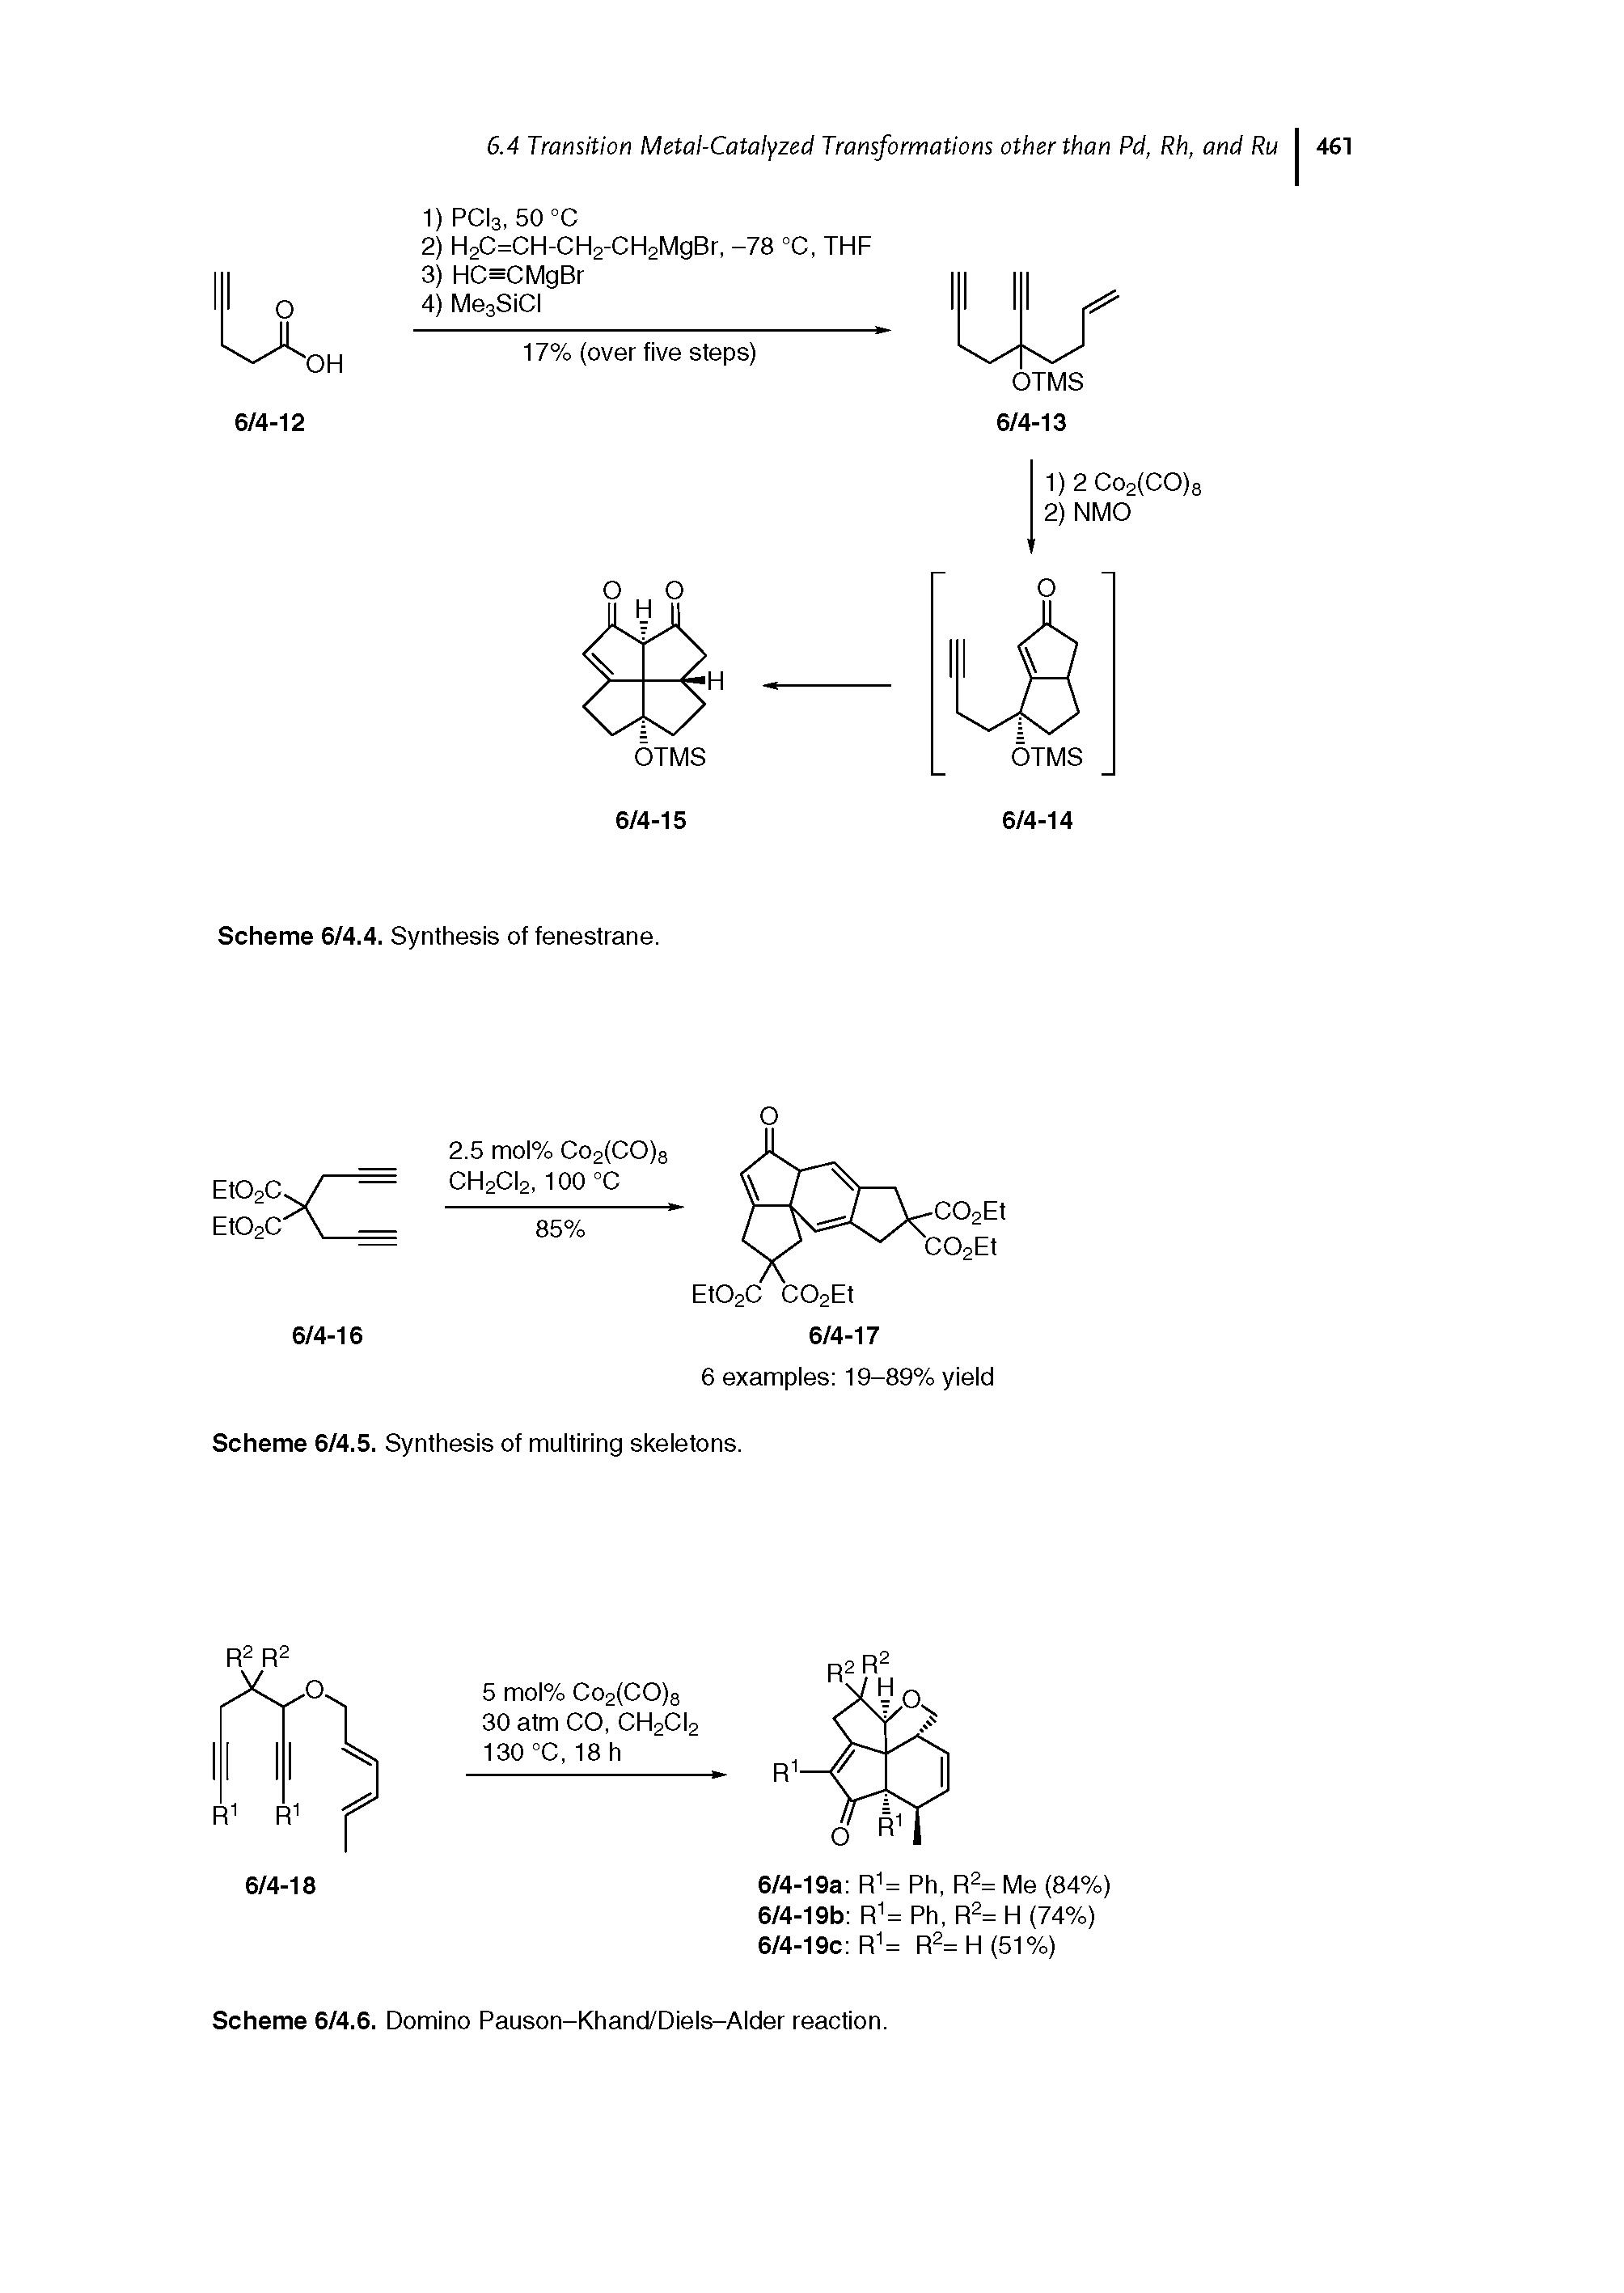 Scheme 6/4.6. Domino Pauson-Khand/Diels-Alder reaction.